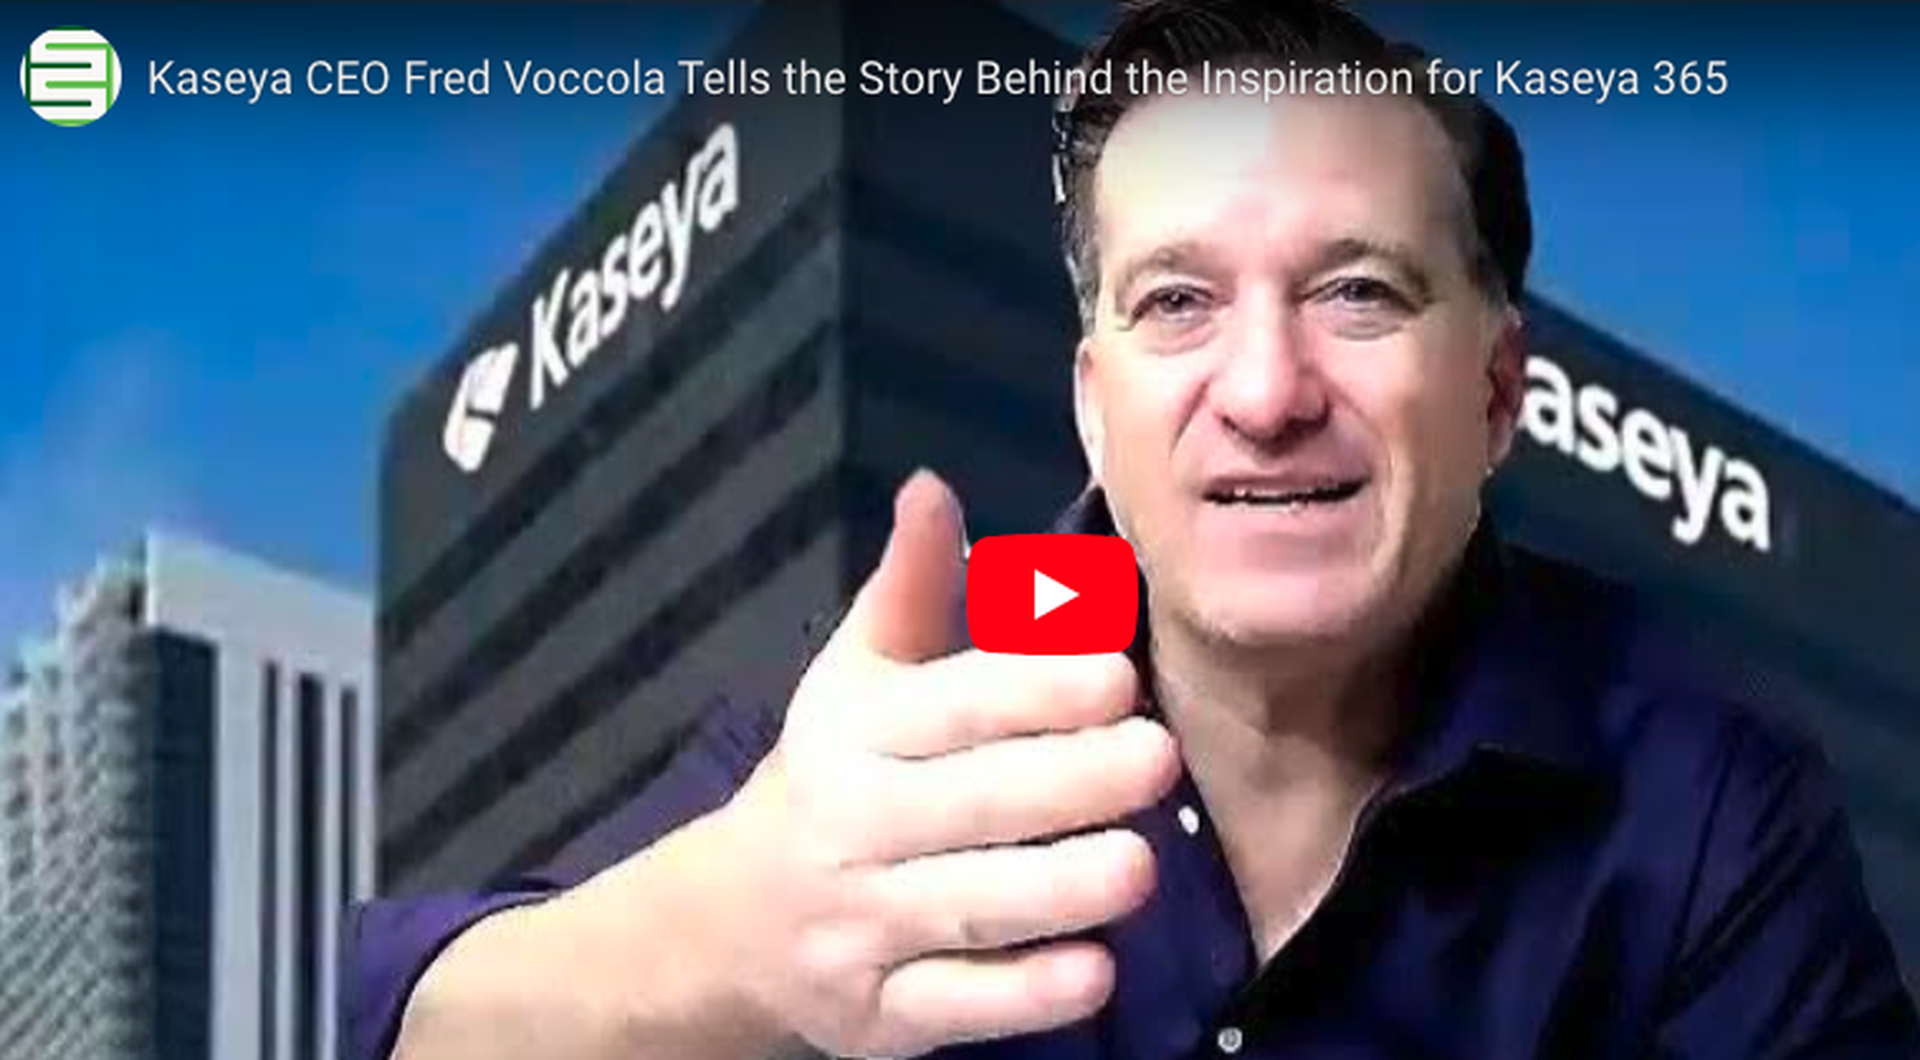 Kaseya CEO Fred Voccola tells ChannelE2E the origin story of Kaseya 365